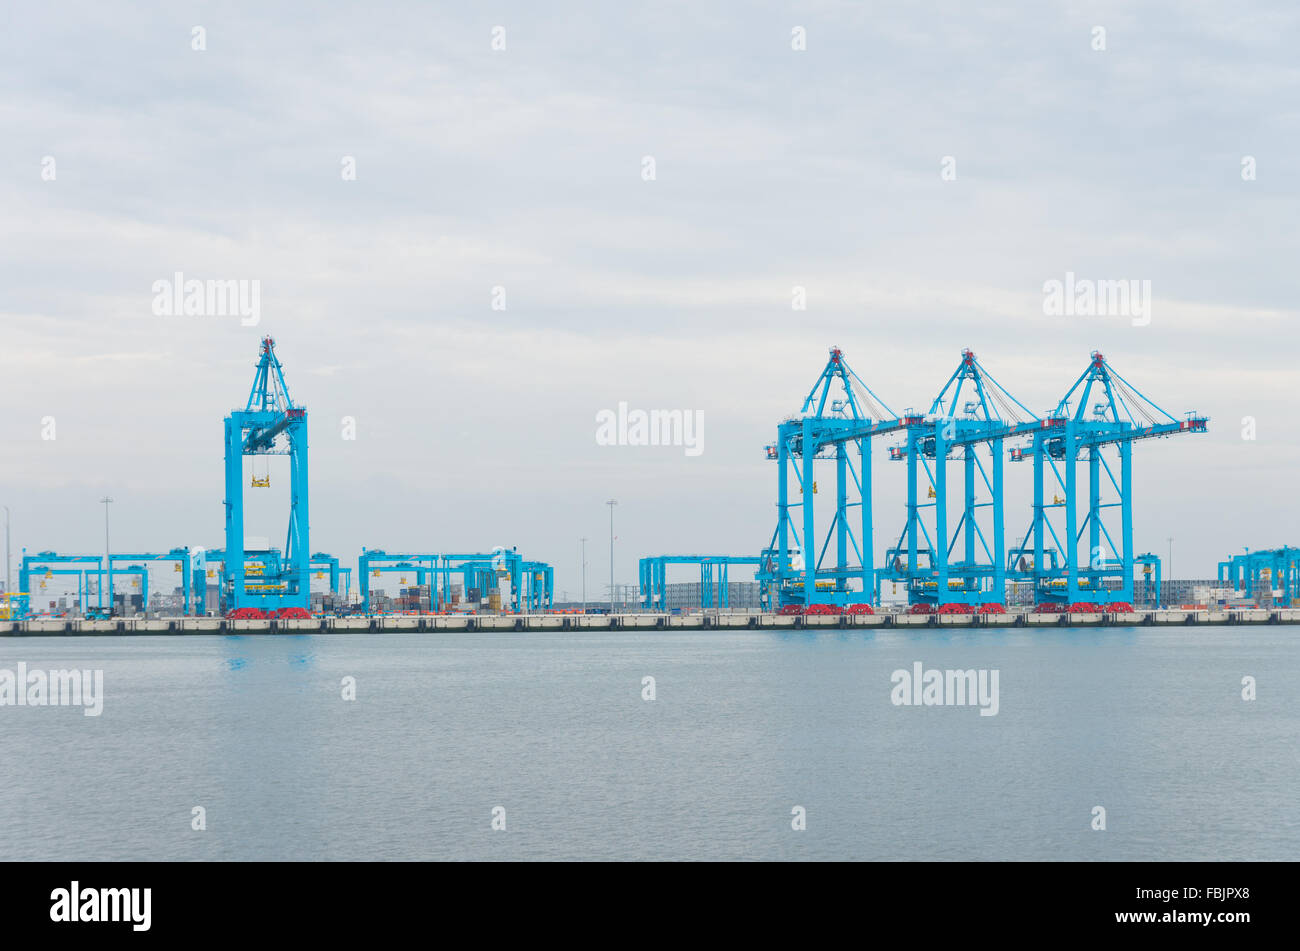 row of large harbor cranes in the rotterdam harbor Stock Photo